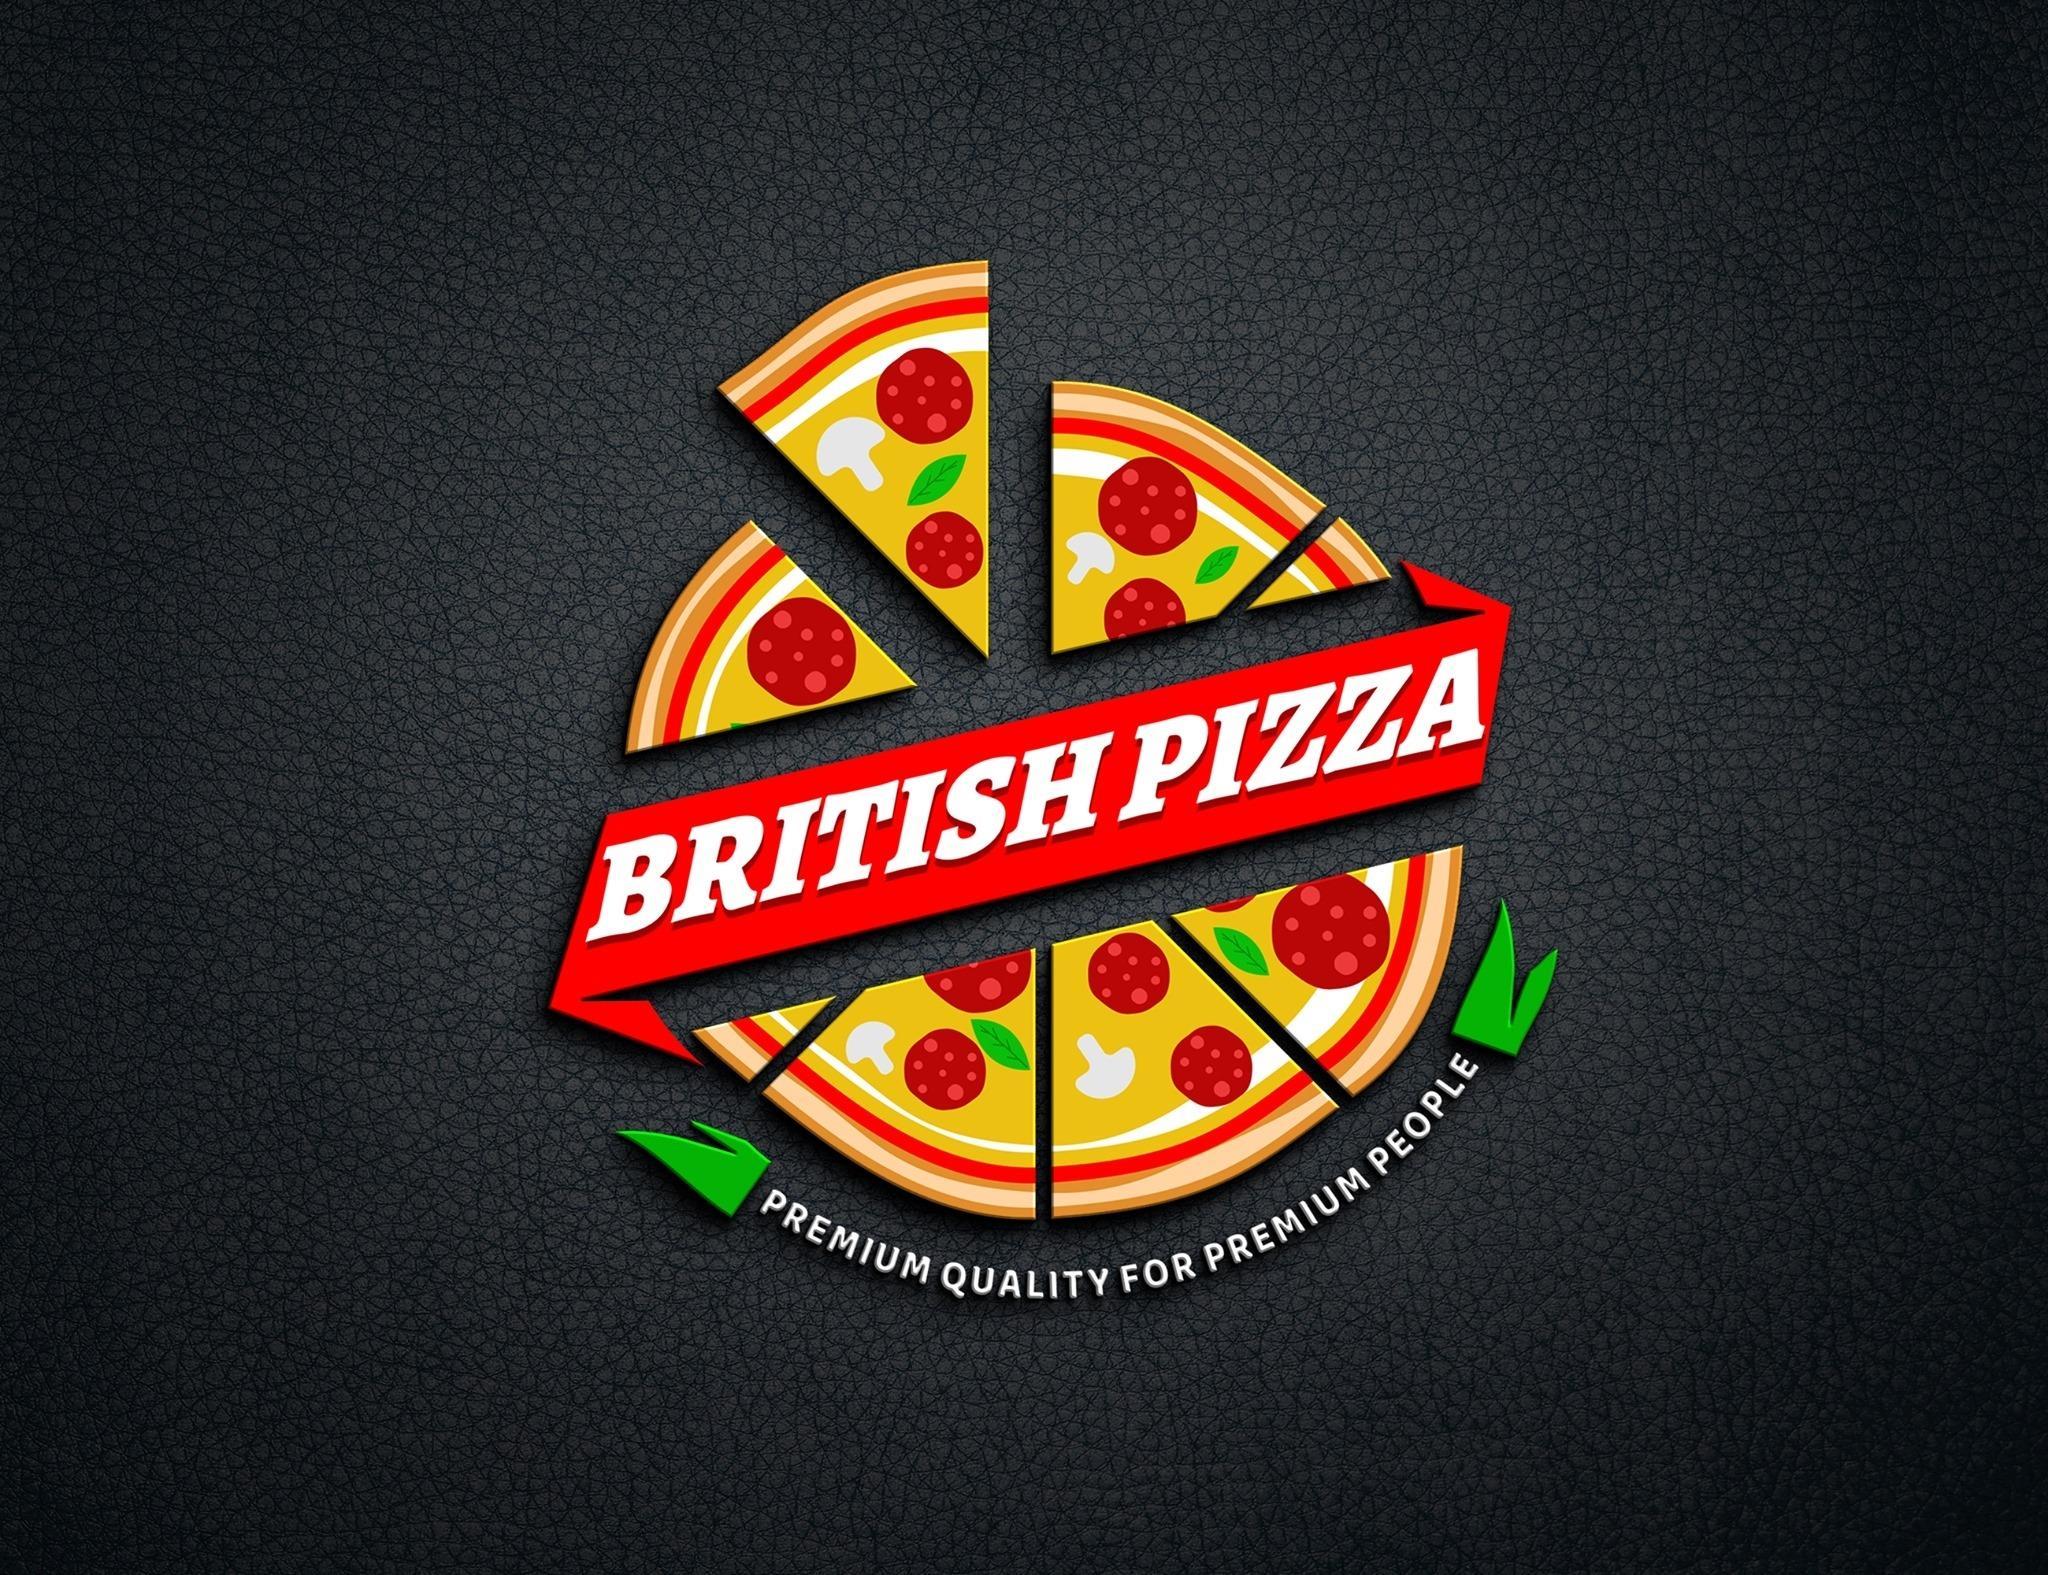 British Pizza - Kalol